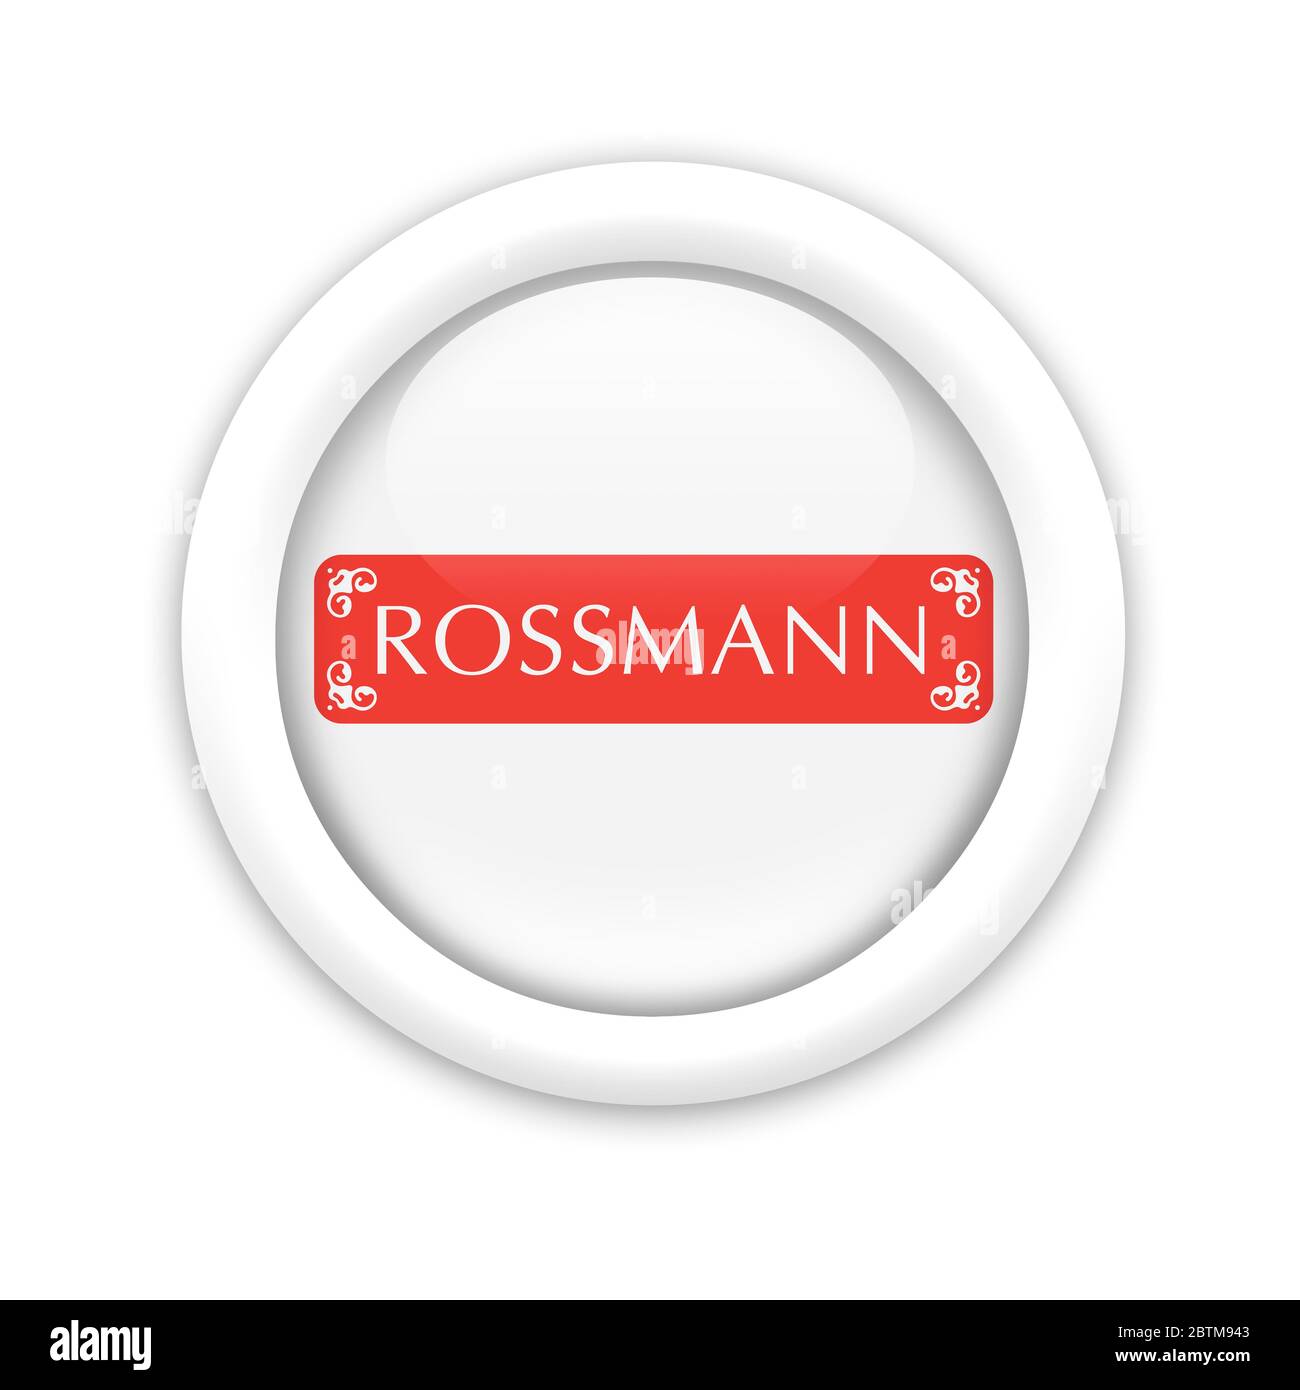 Black Friday 2019 Rossmann